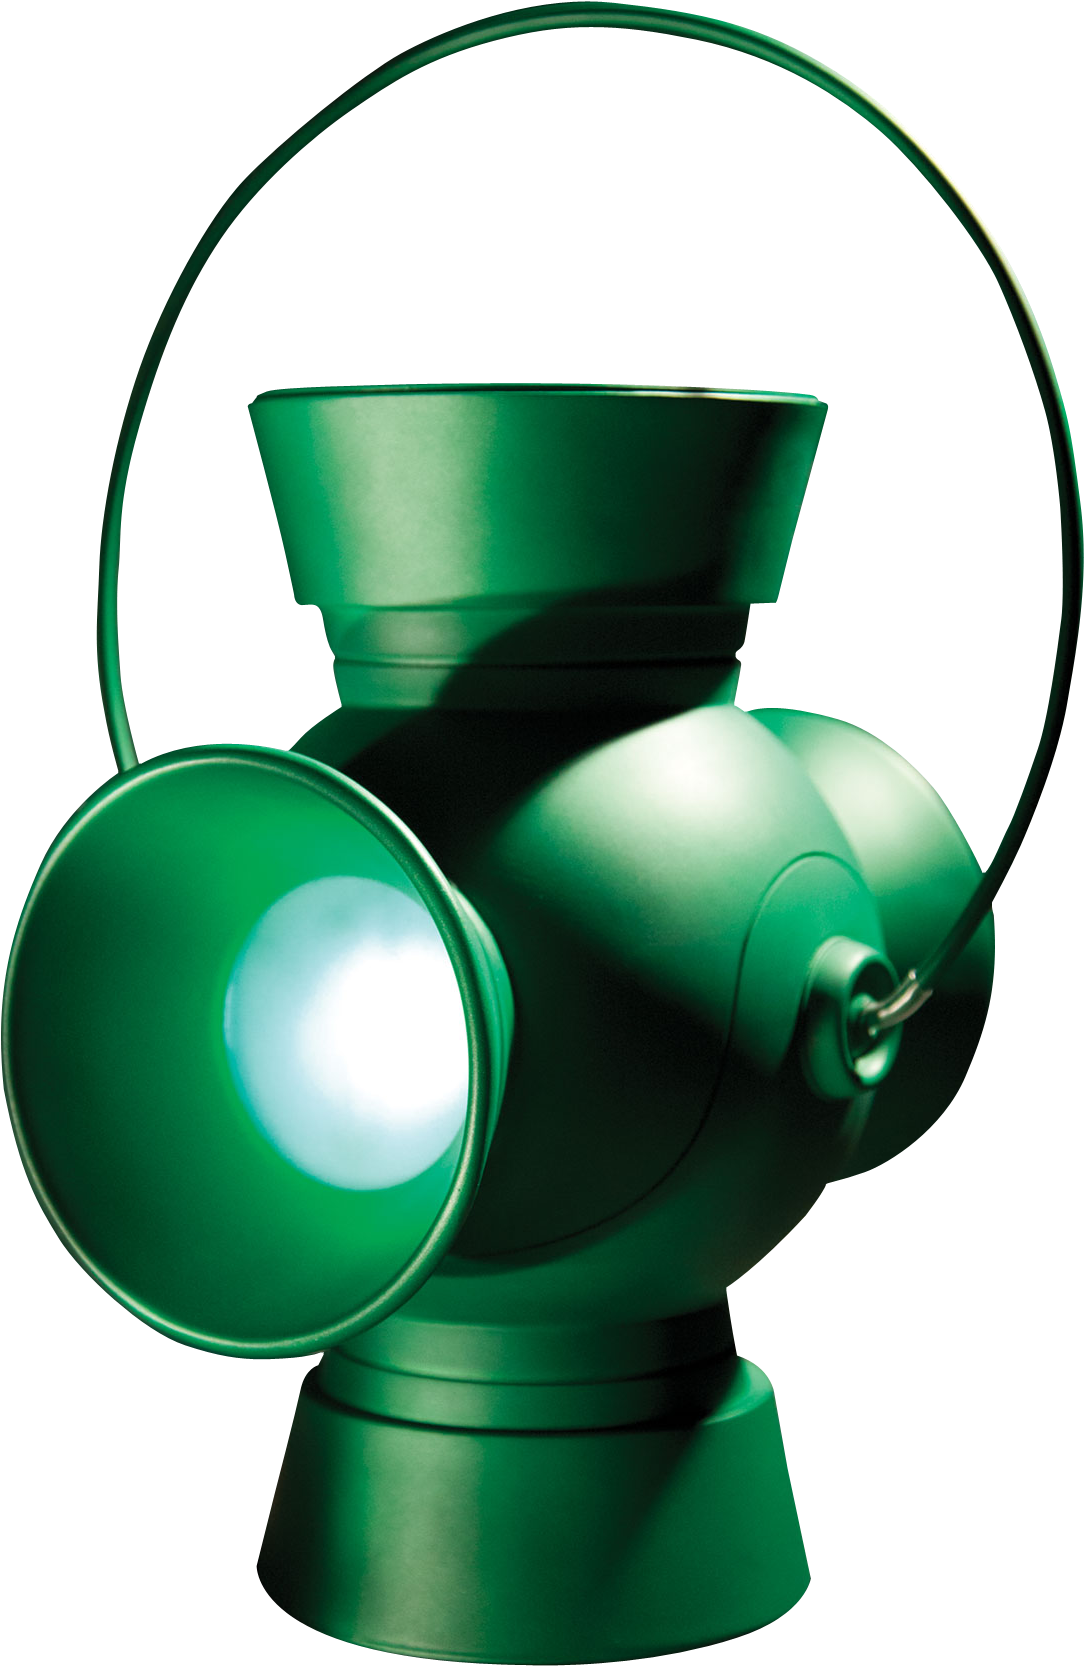 Green Lantern Green Lantern Corps Power Battery With - Green Lantern Power Battery Replica (1127x1706)